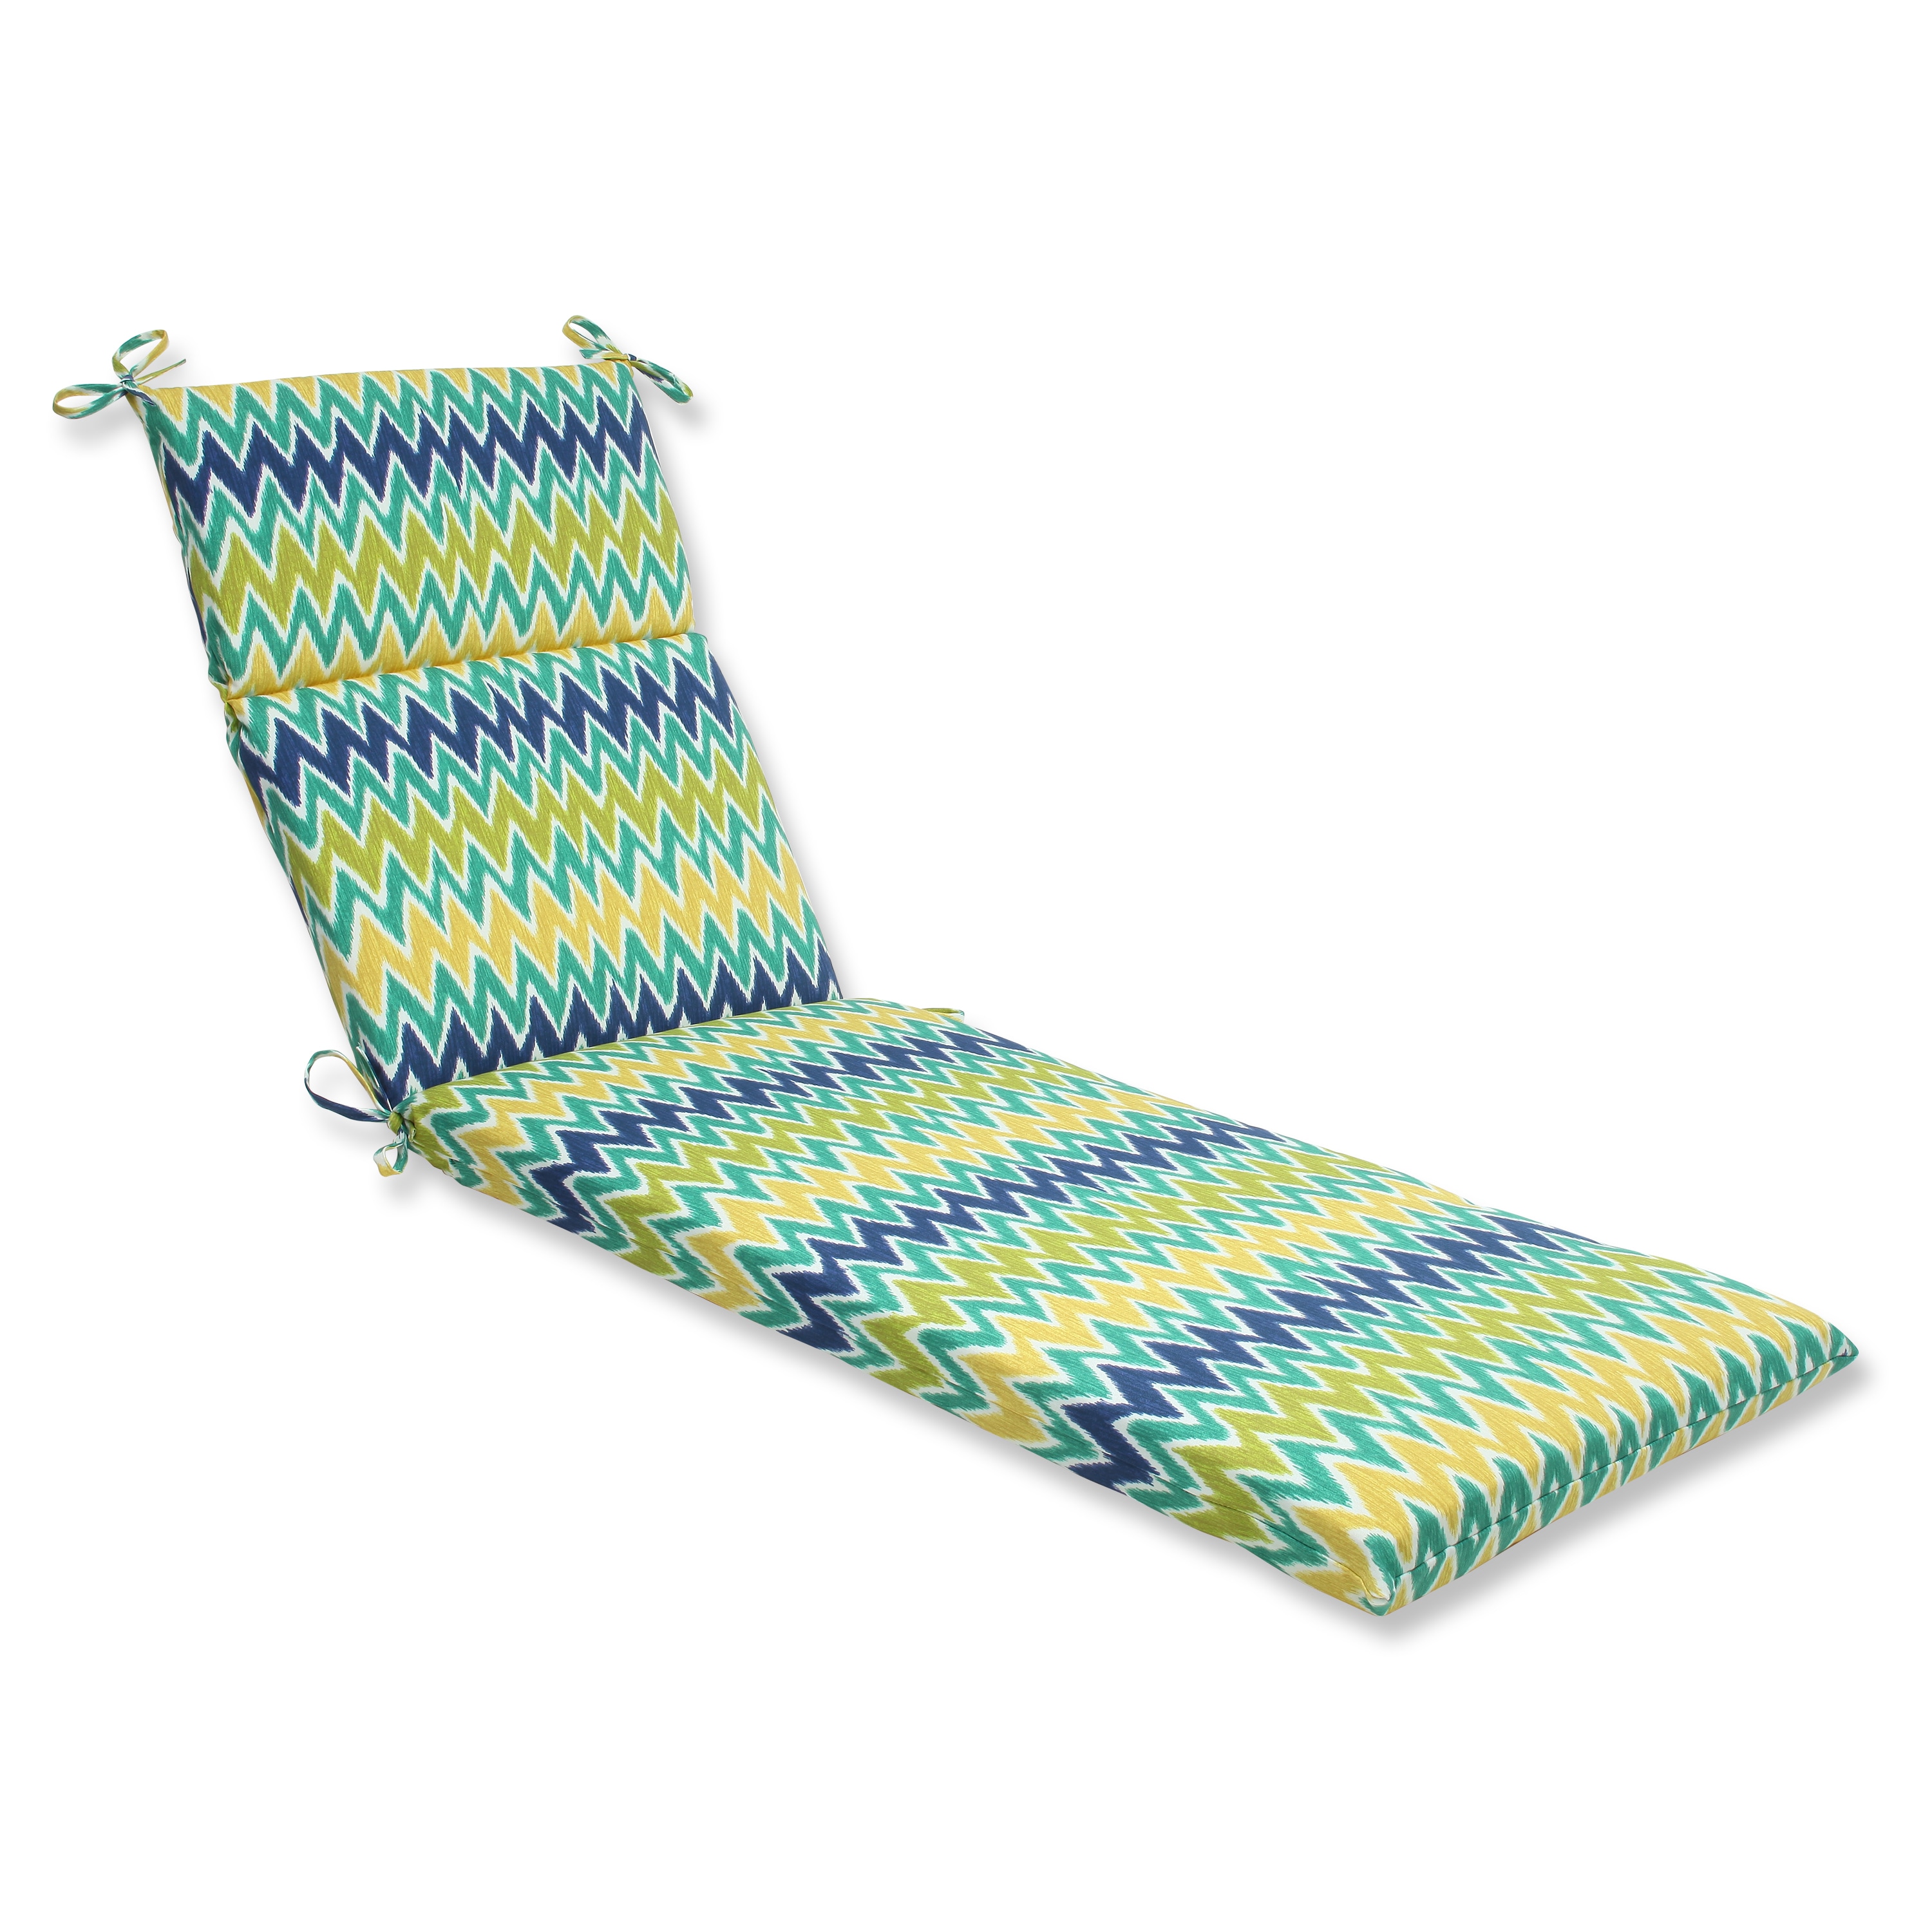 Pillow Perfect Zulu Blue/ Green Chaise Lounge Outdoor Cushion